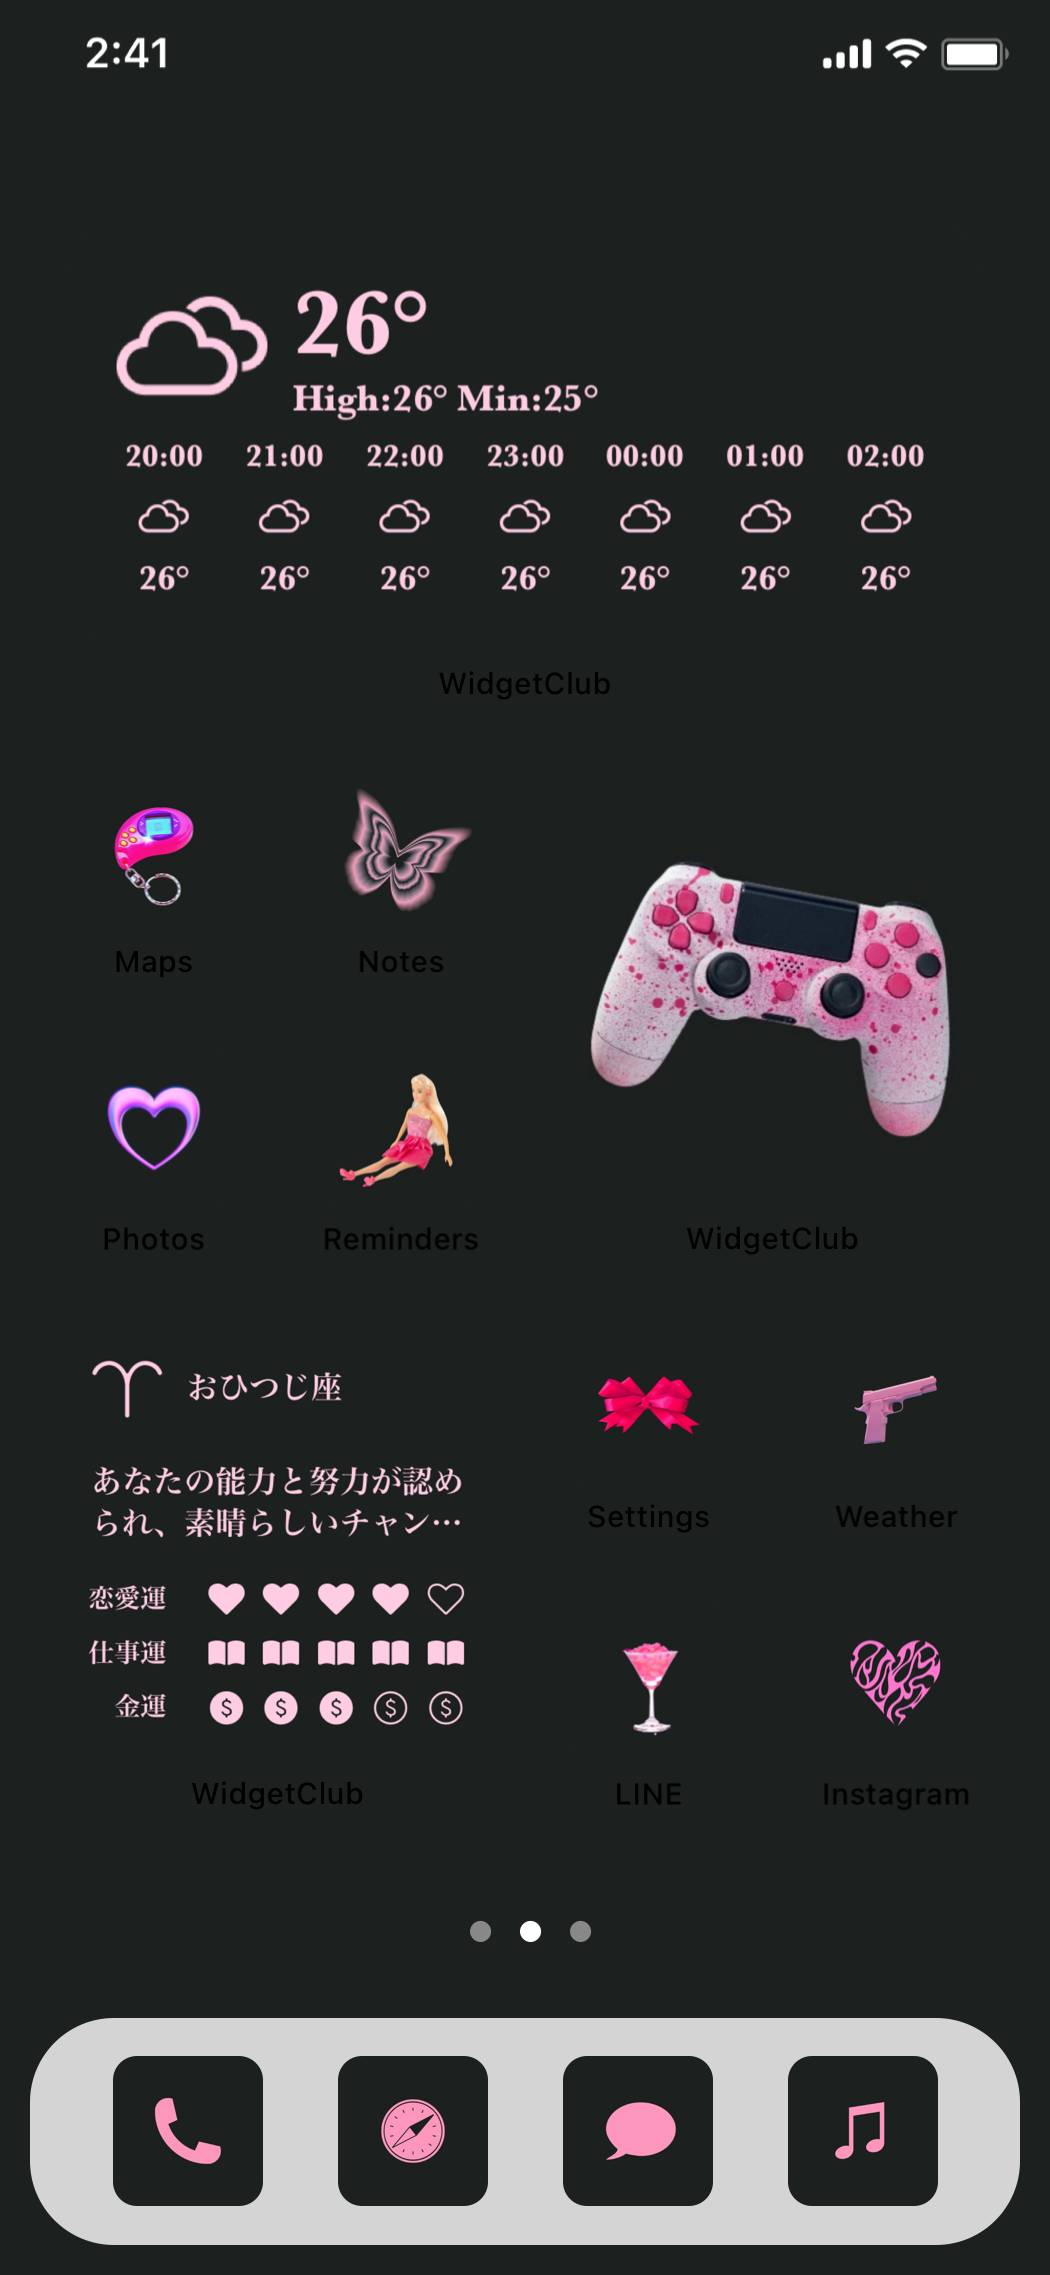 black & pink × kawaiiІдеї для головного екрана[Wd2jDPN1e19MYUkA4lZR]